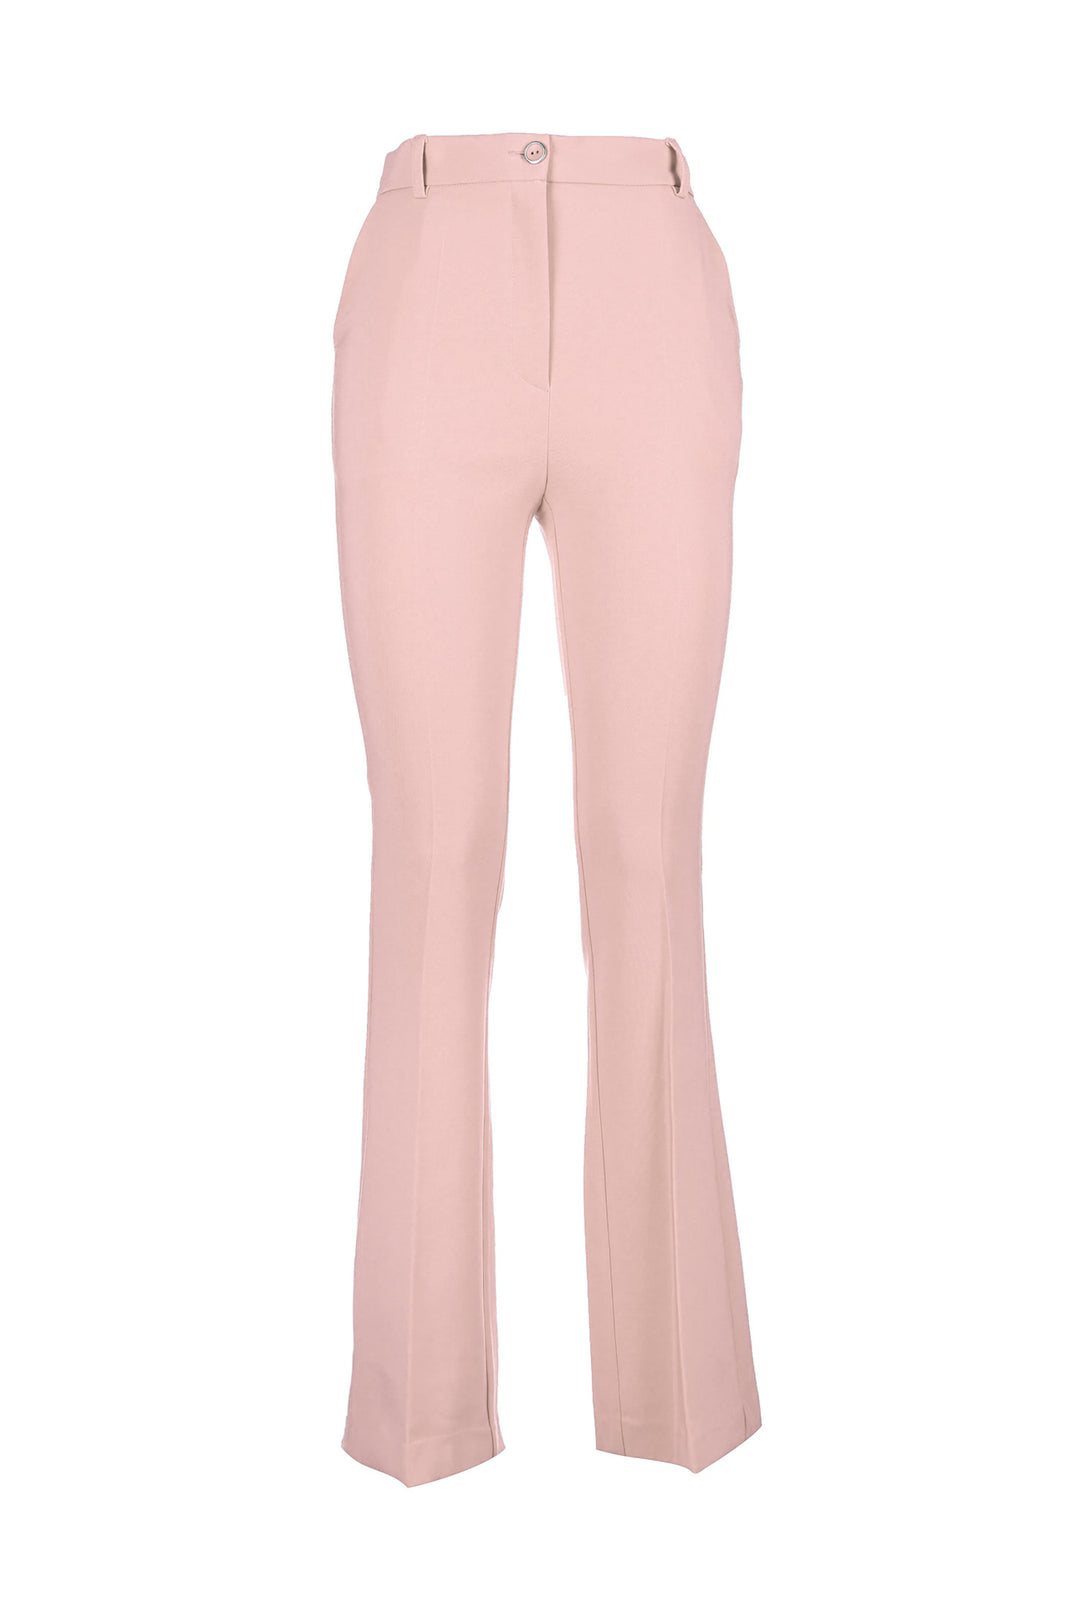 FRACOMINA Pantaloni bootcut rosa polvere in tessuto tecnico - Mancinelli 1954